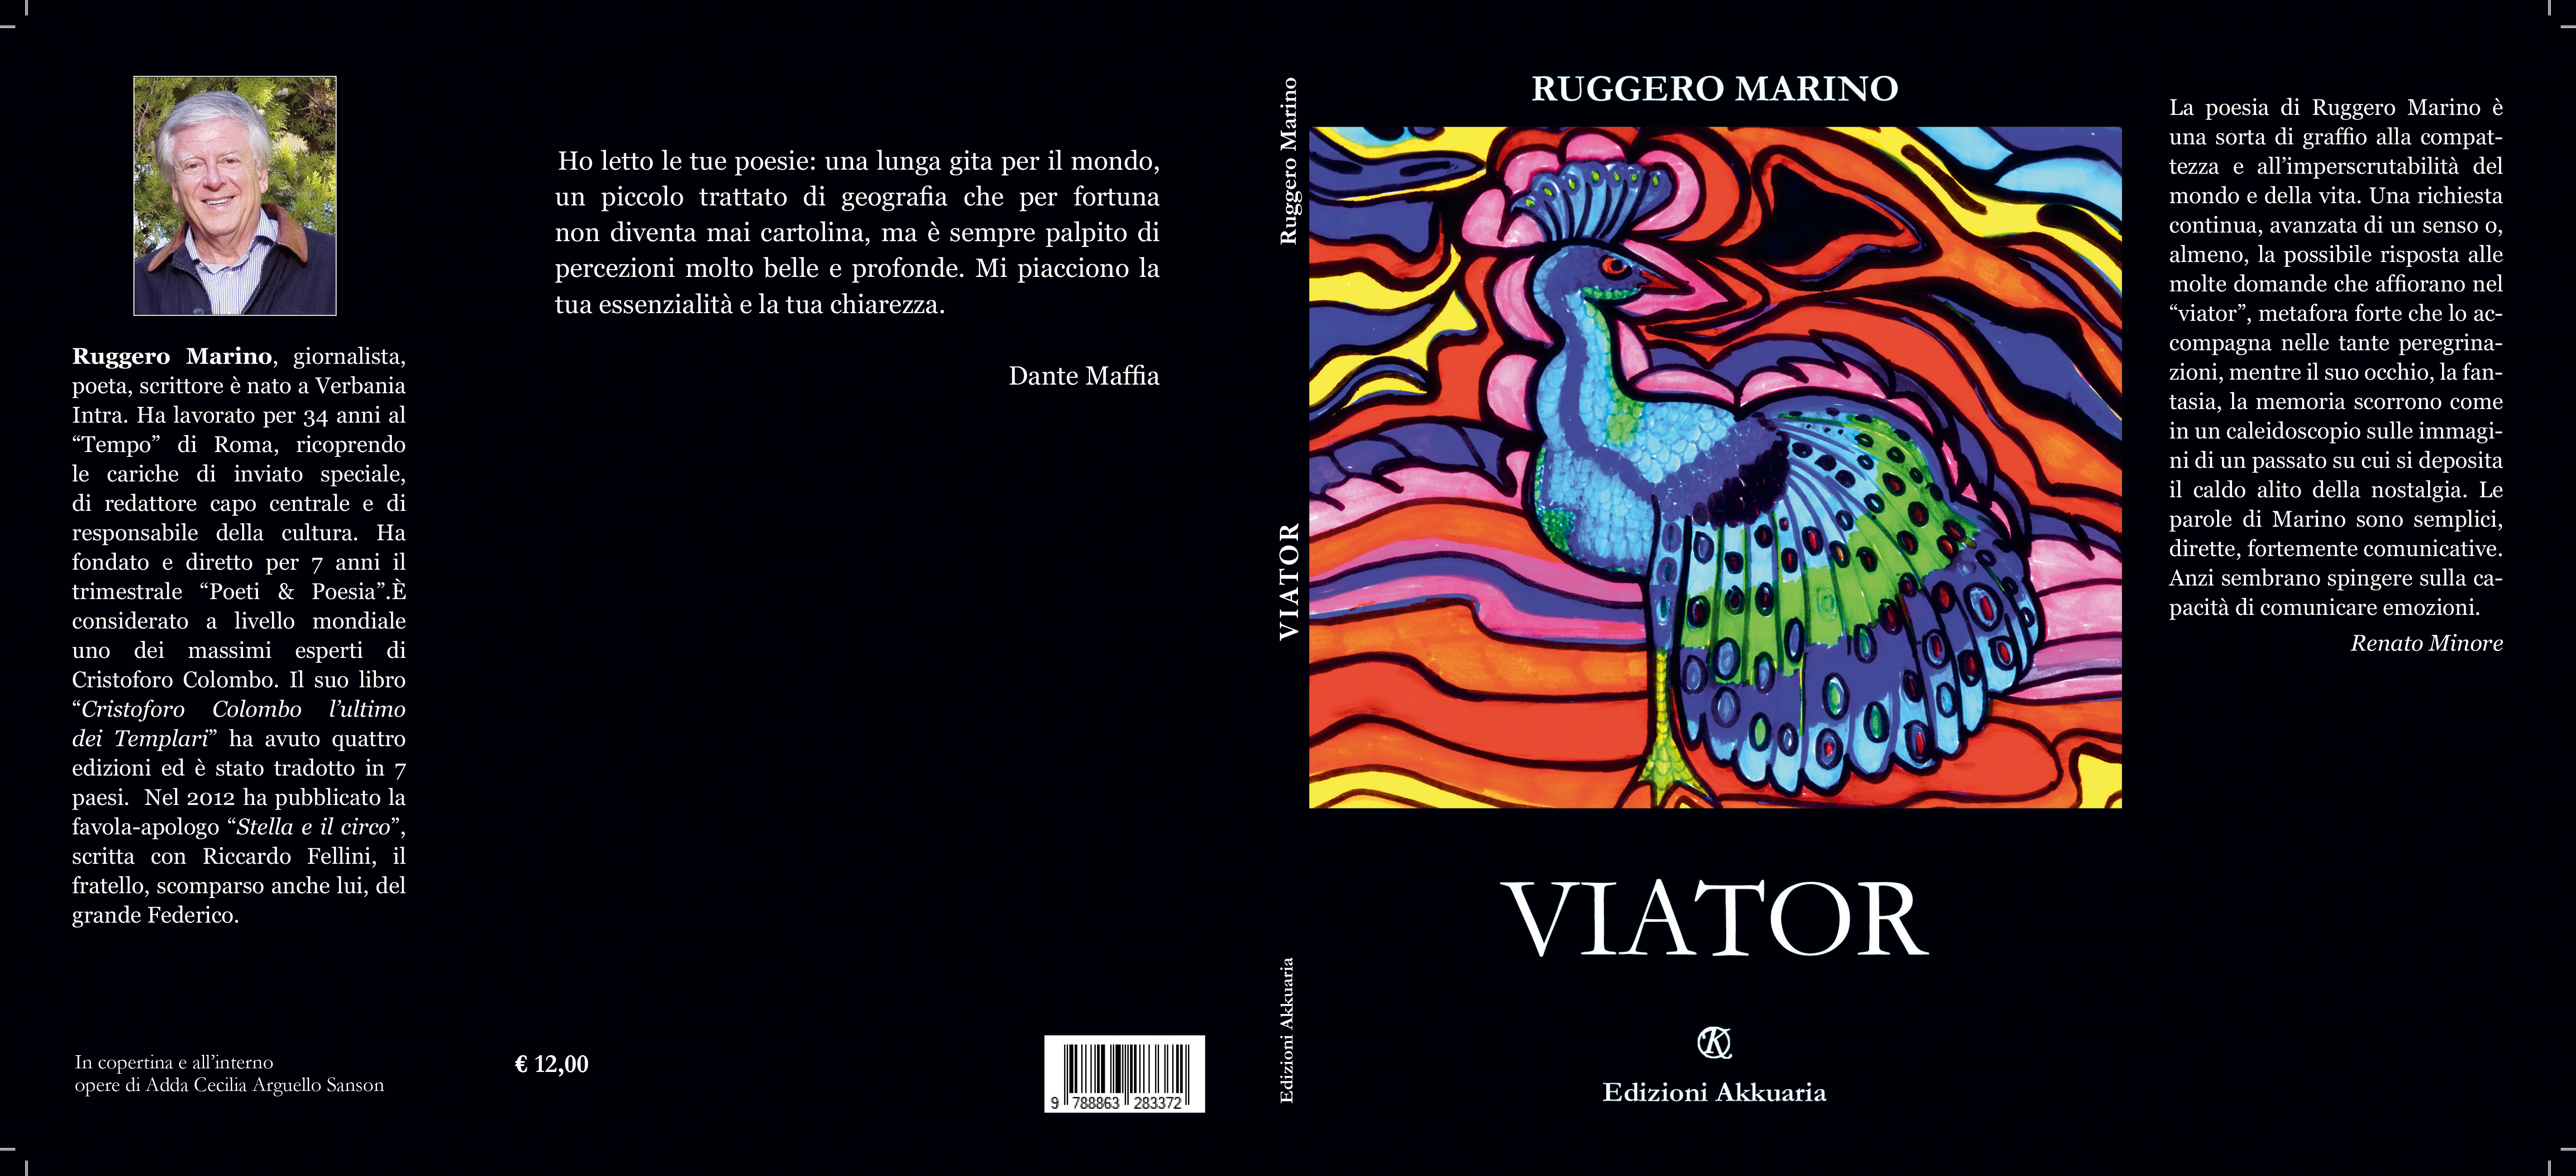 Ruggero Marino copertina libro Viator